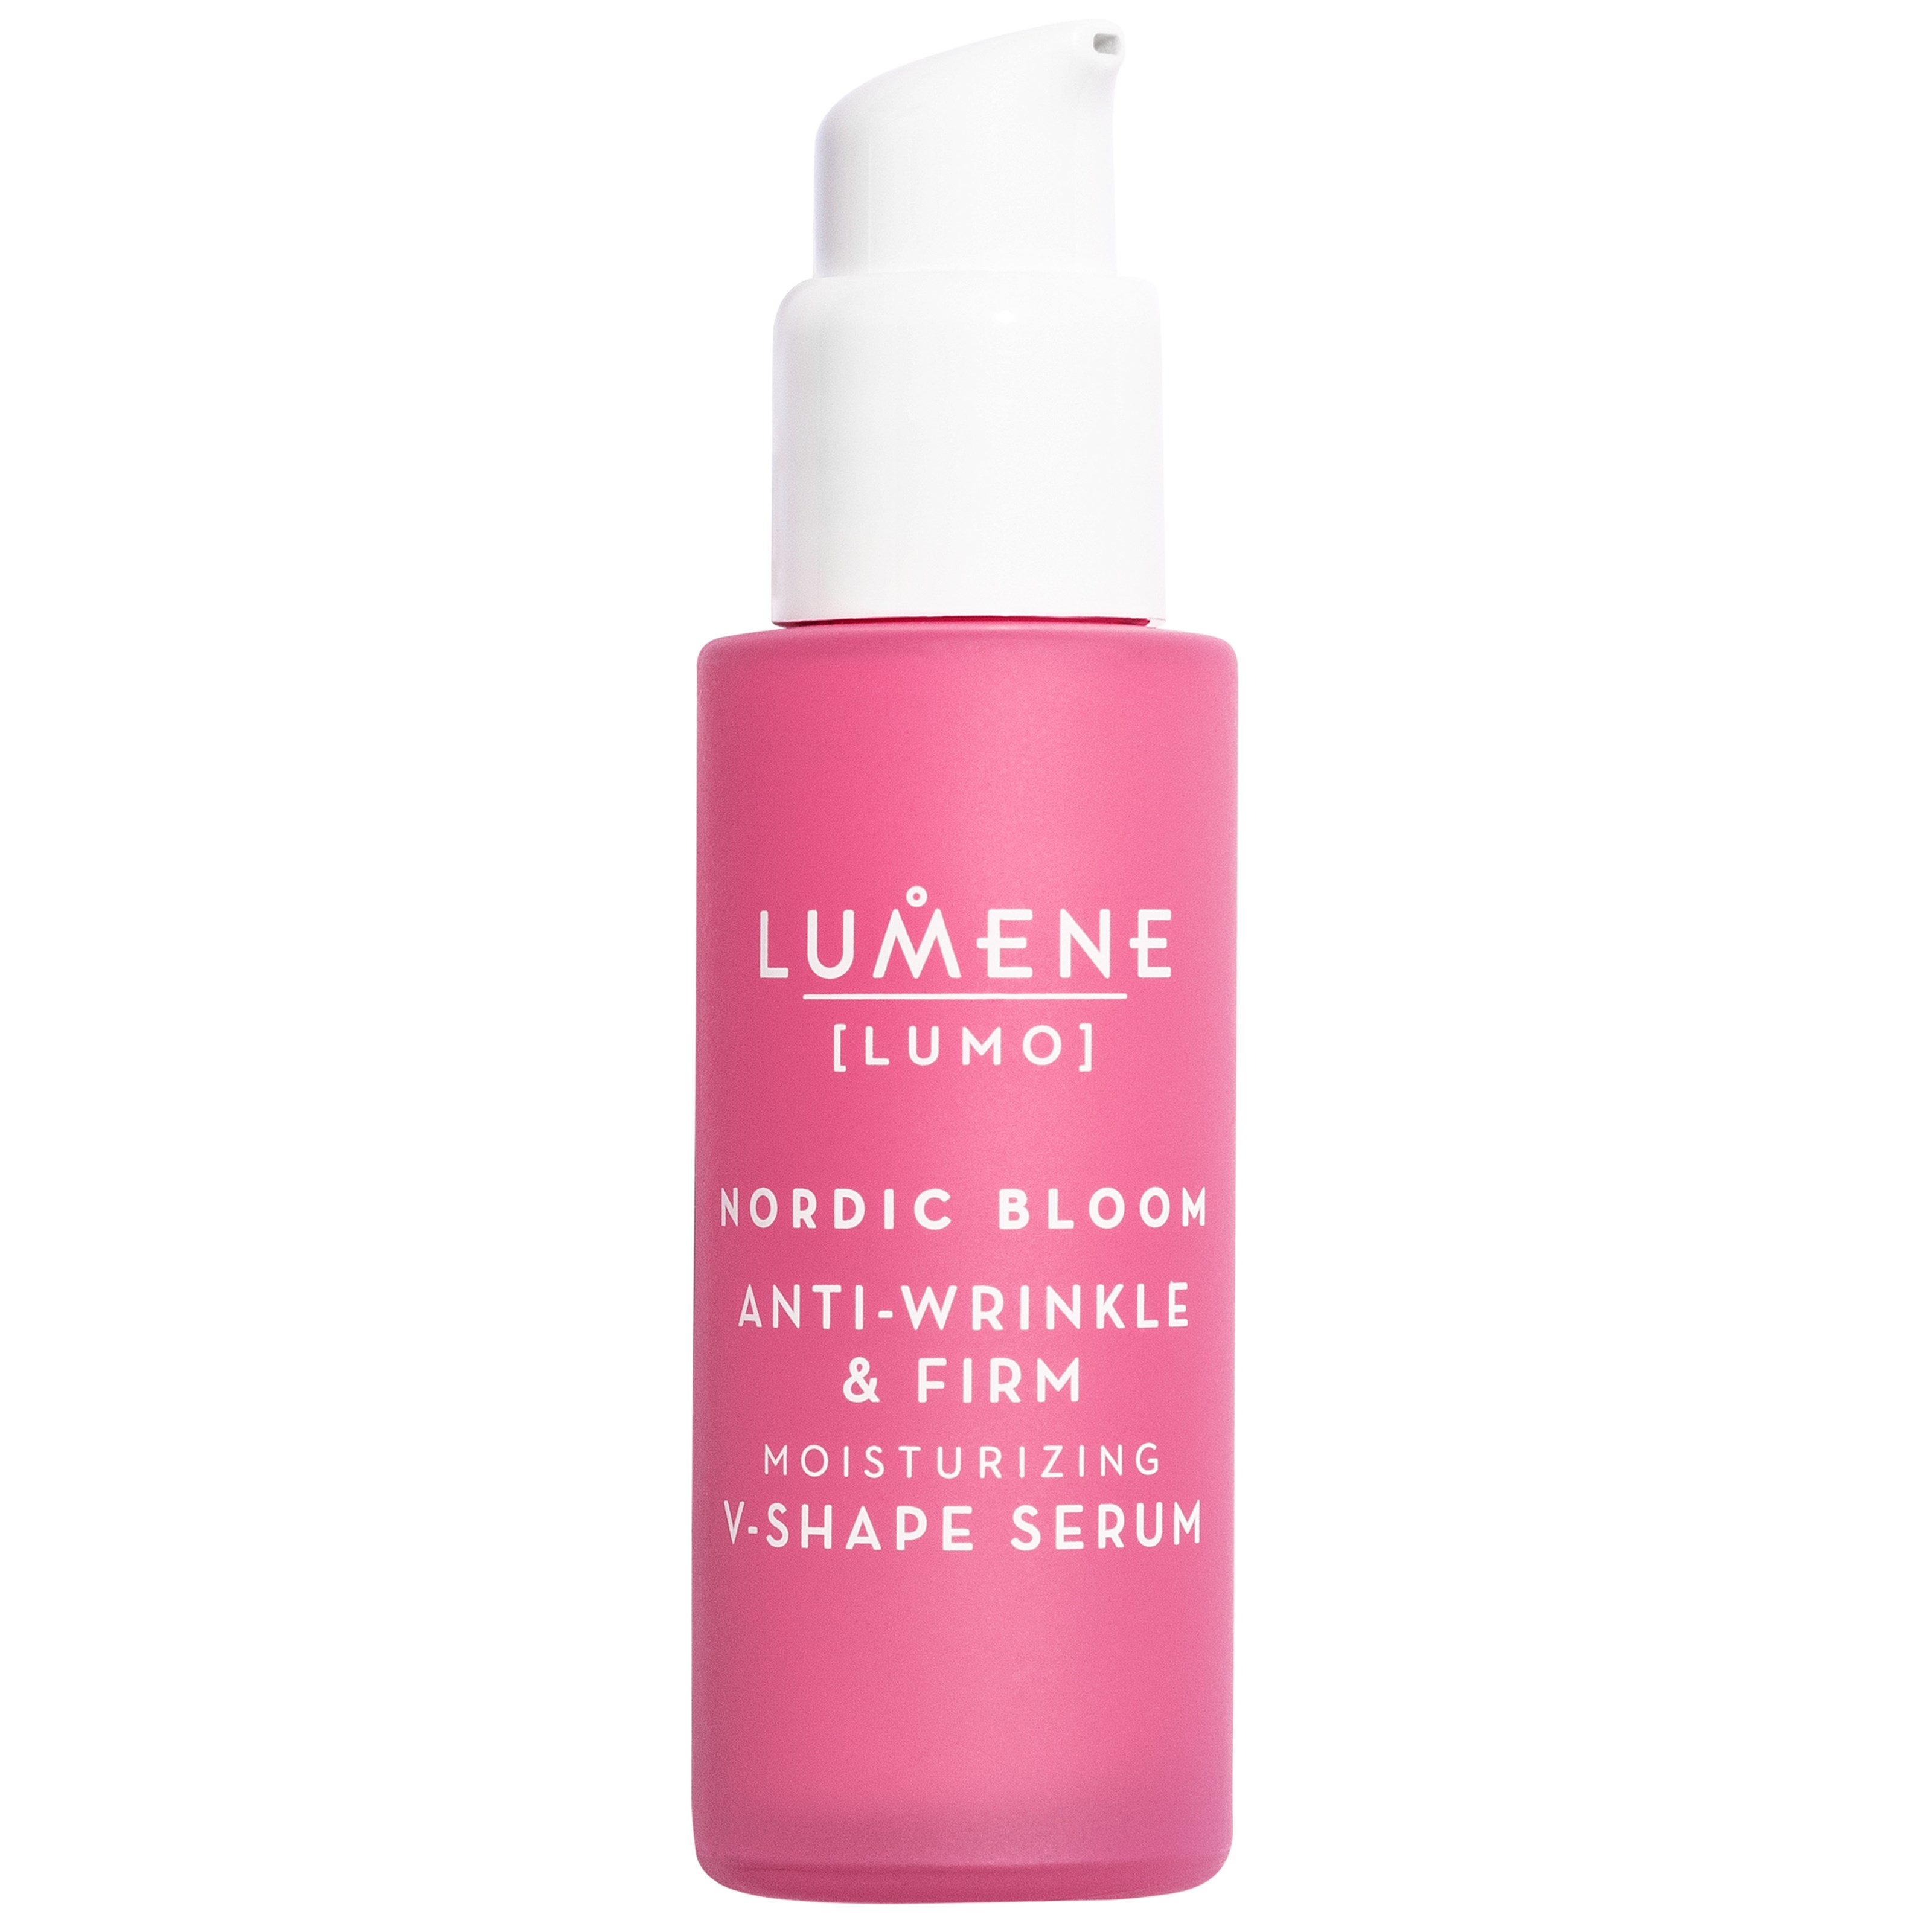 Lumene Nordic Bloom Anti-wrinkle & Firm Moisturizing V-Shape Serum 30